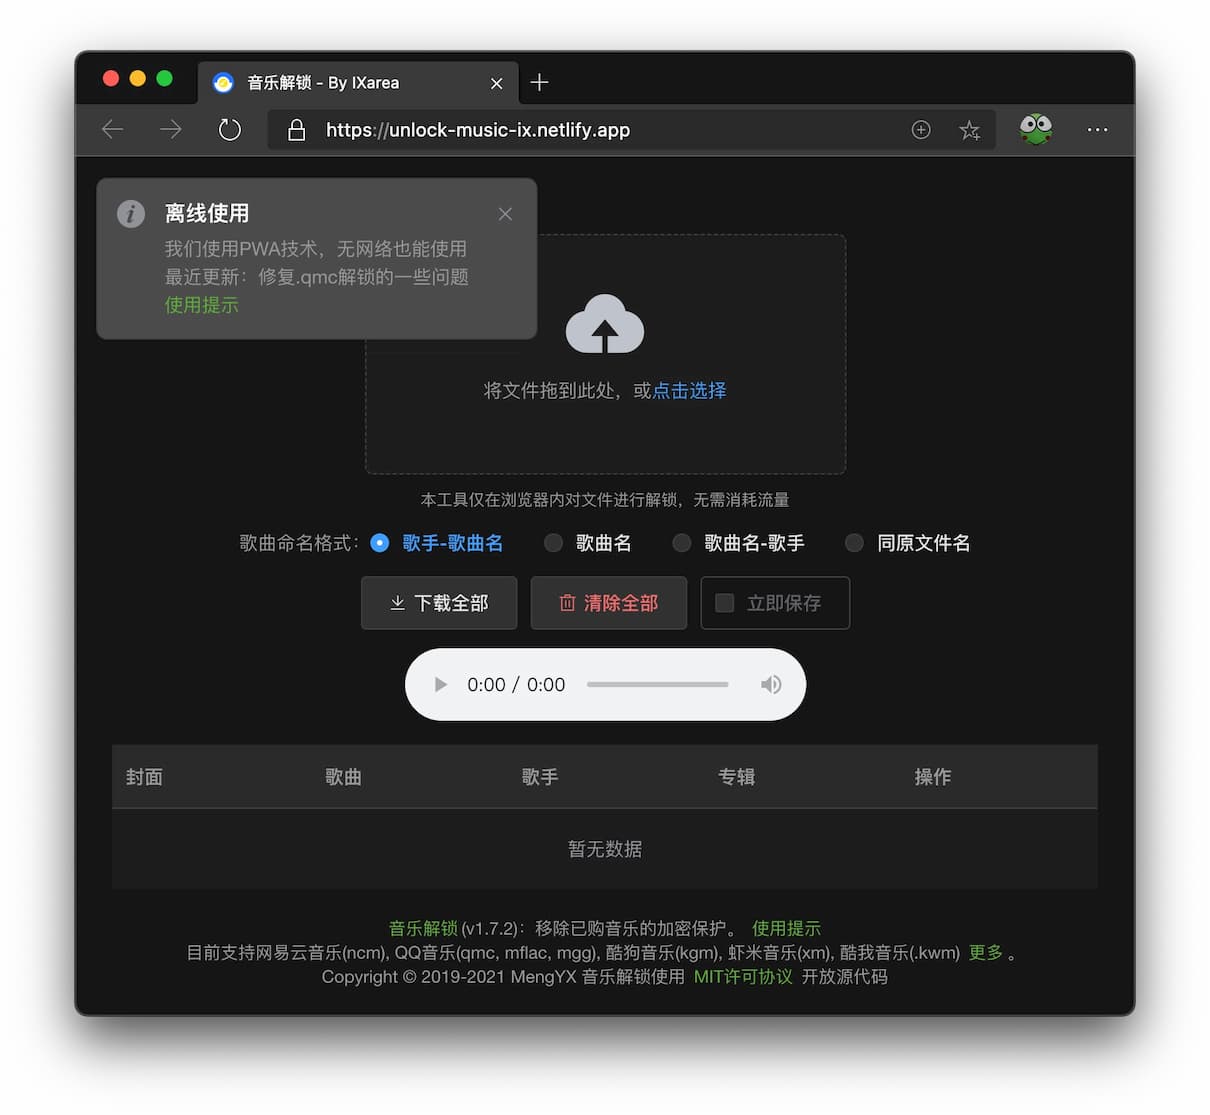 Unlock Music 音乐解锁 - 解锁虾米音乐 .xm 格式，还支持 QQ 音乐、网易云音乐、酷狗/酷我音乐特殊格式解锁 2